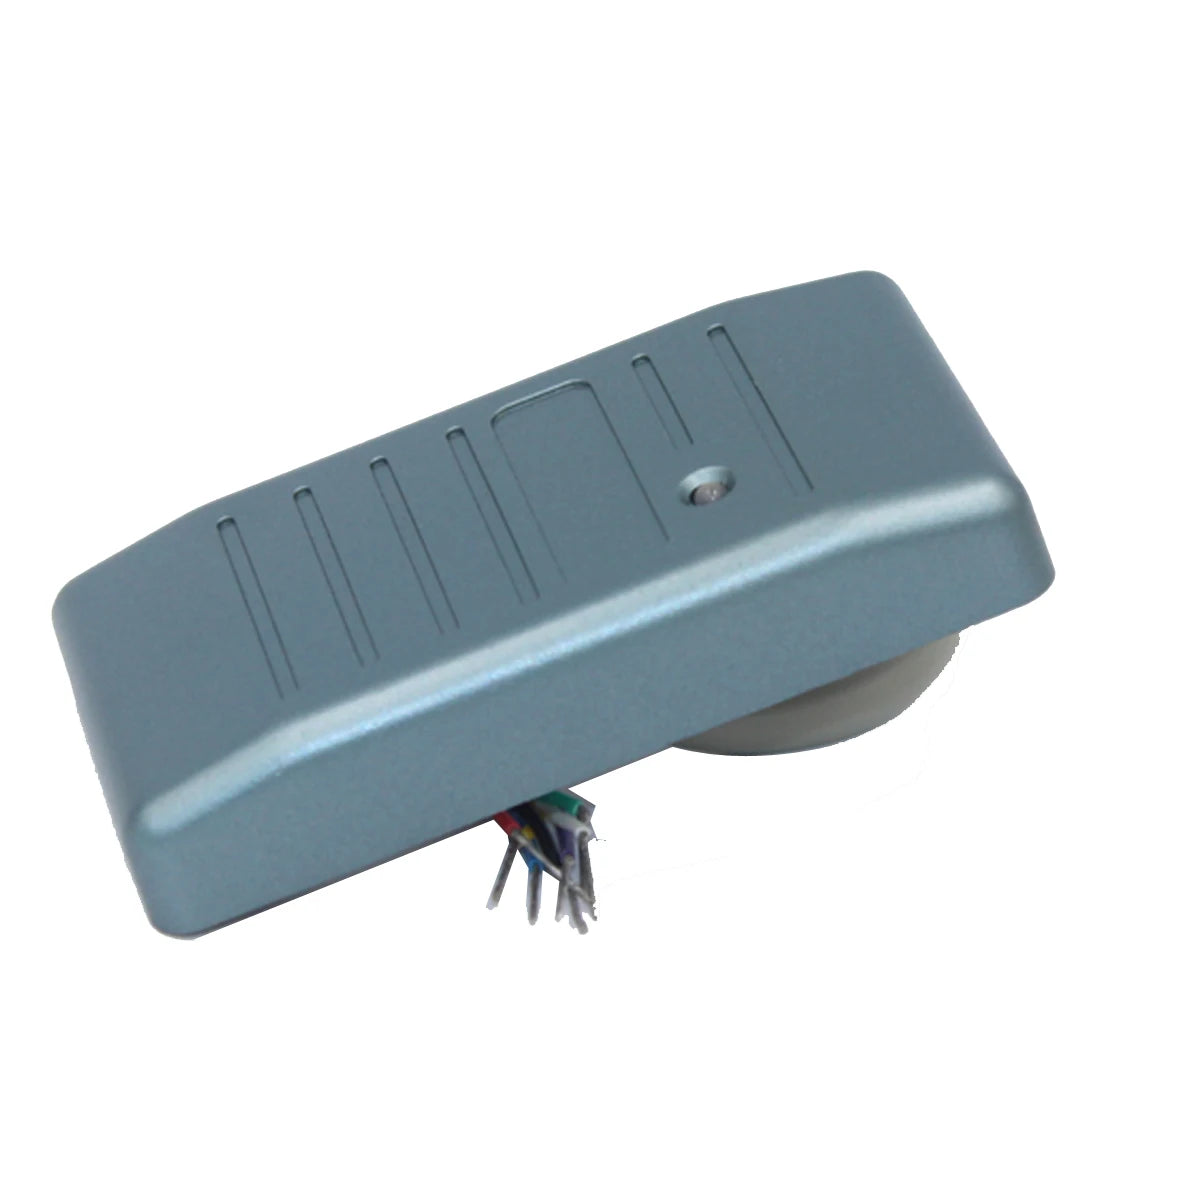 125khz Access Control RFID Card Reader IP65 Waterproof Wiegand 26 34 Card Reader LED Indicators Security RFID EM ID Card Reader